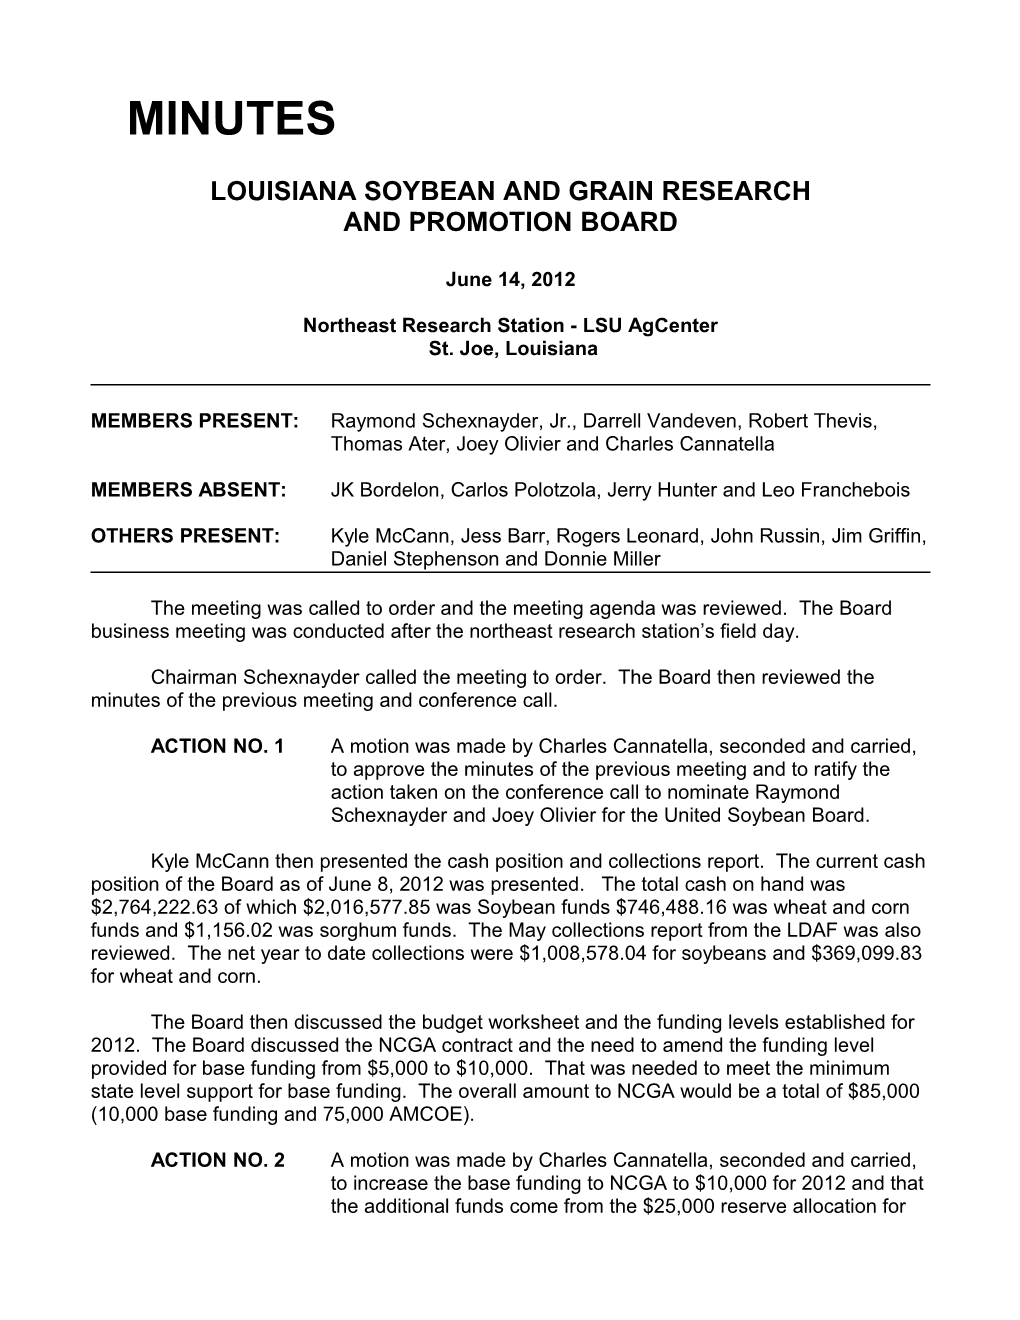 Louisiana Soybean and Grain Research